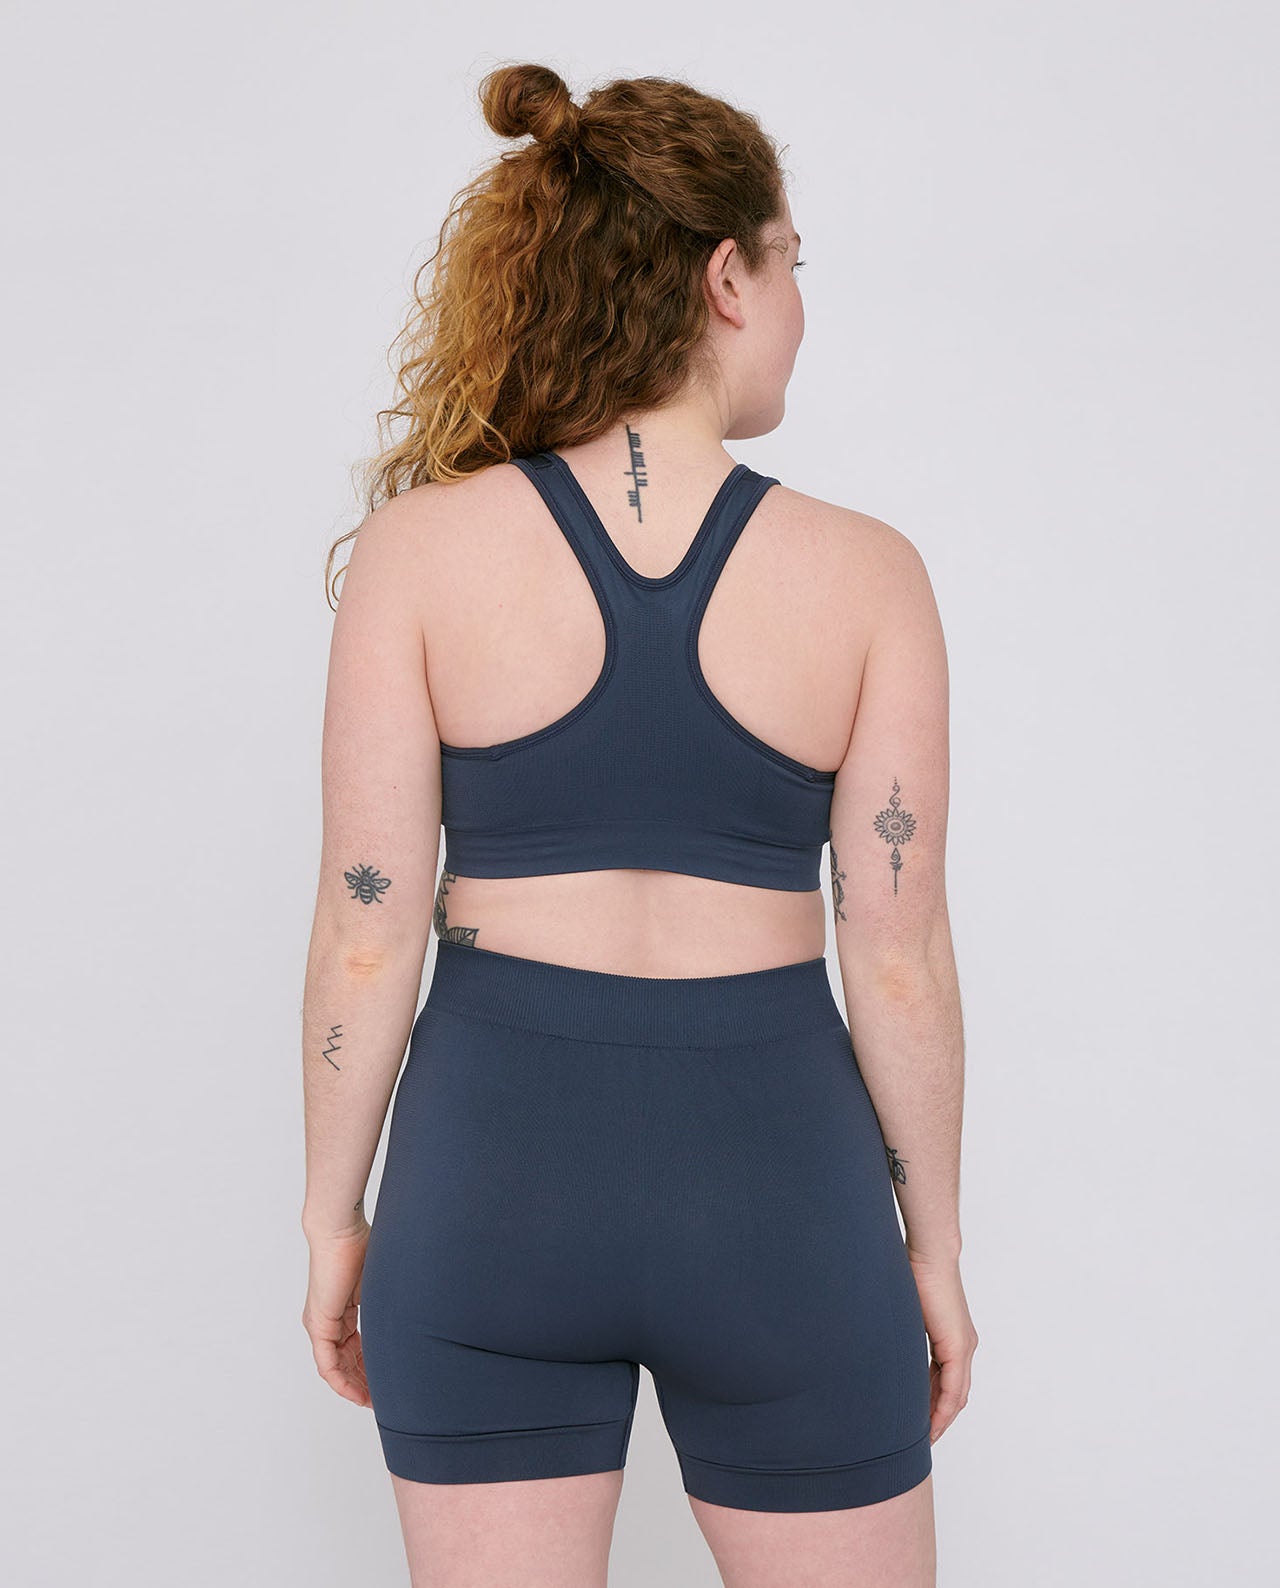 marché commun organic basics brassière femme sport yoga recyclée bleu cendré